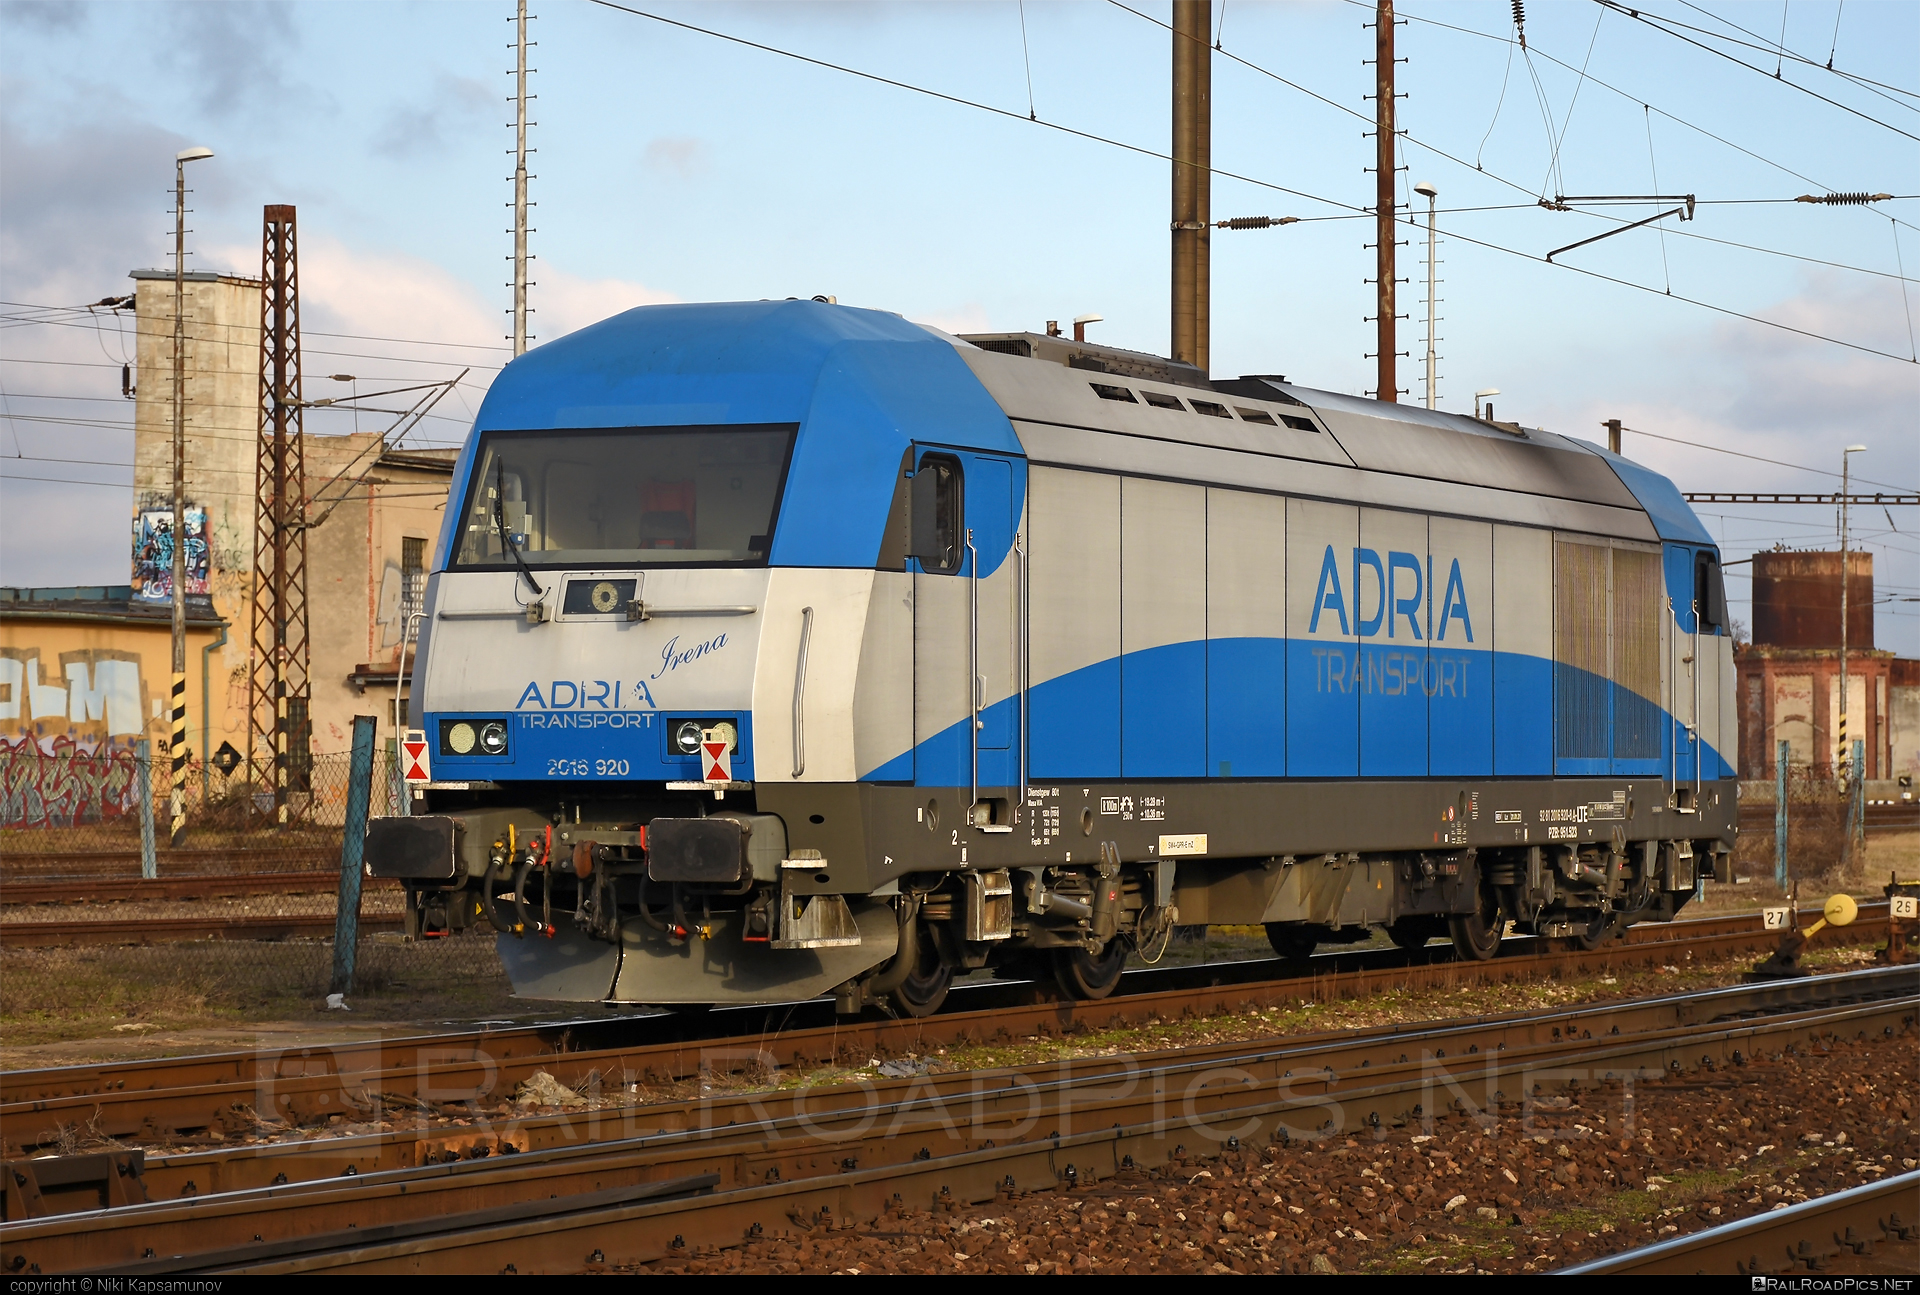 Siemens ER20 - 2016 920 operated by Adria Transport D.O.O. #adria #adriatransport #er20 #er20hercules #eurorunner #hercules #lte #ltelogistikundtransport #ltelogistikundtransportgmbh #siemens #siemenser20 #siemenser20hercules #siemenseurorunner #siemenshercules